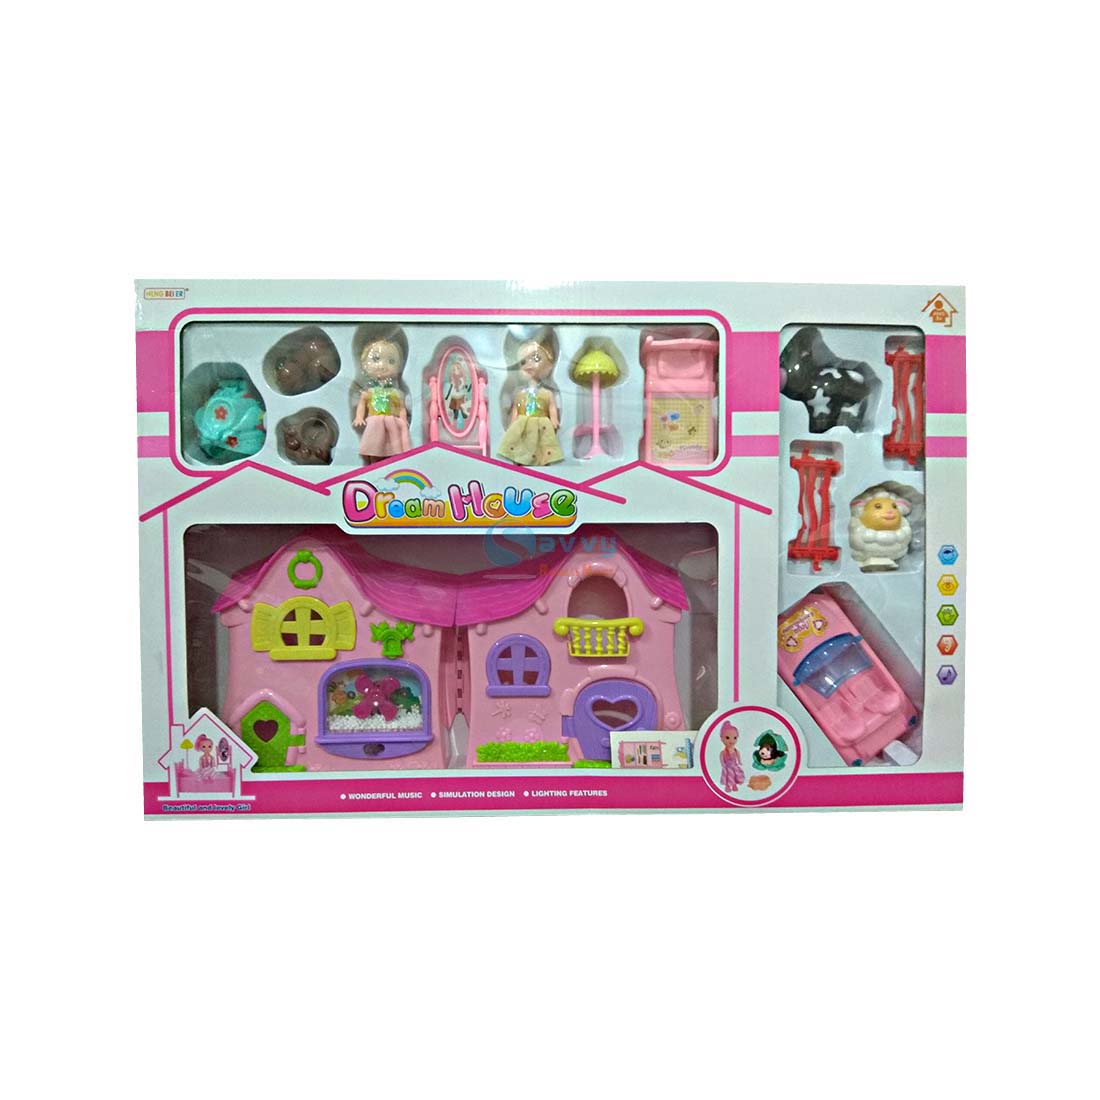 Savvy Doll House for kids SRT5515